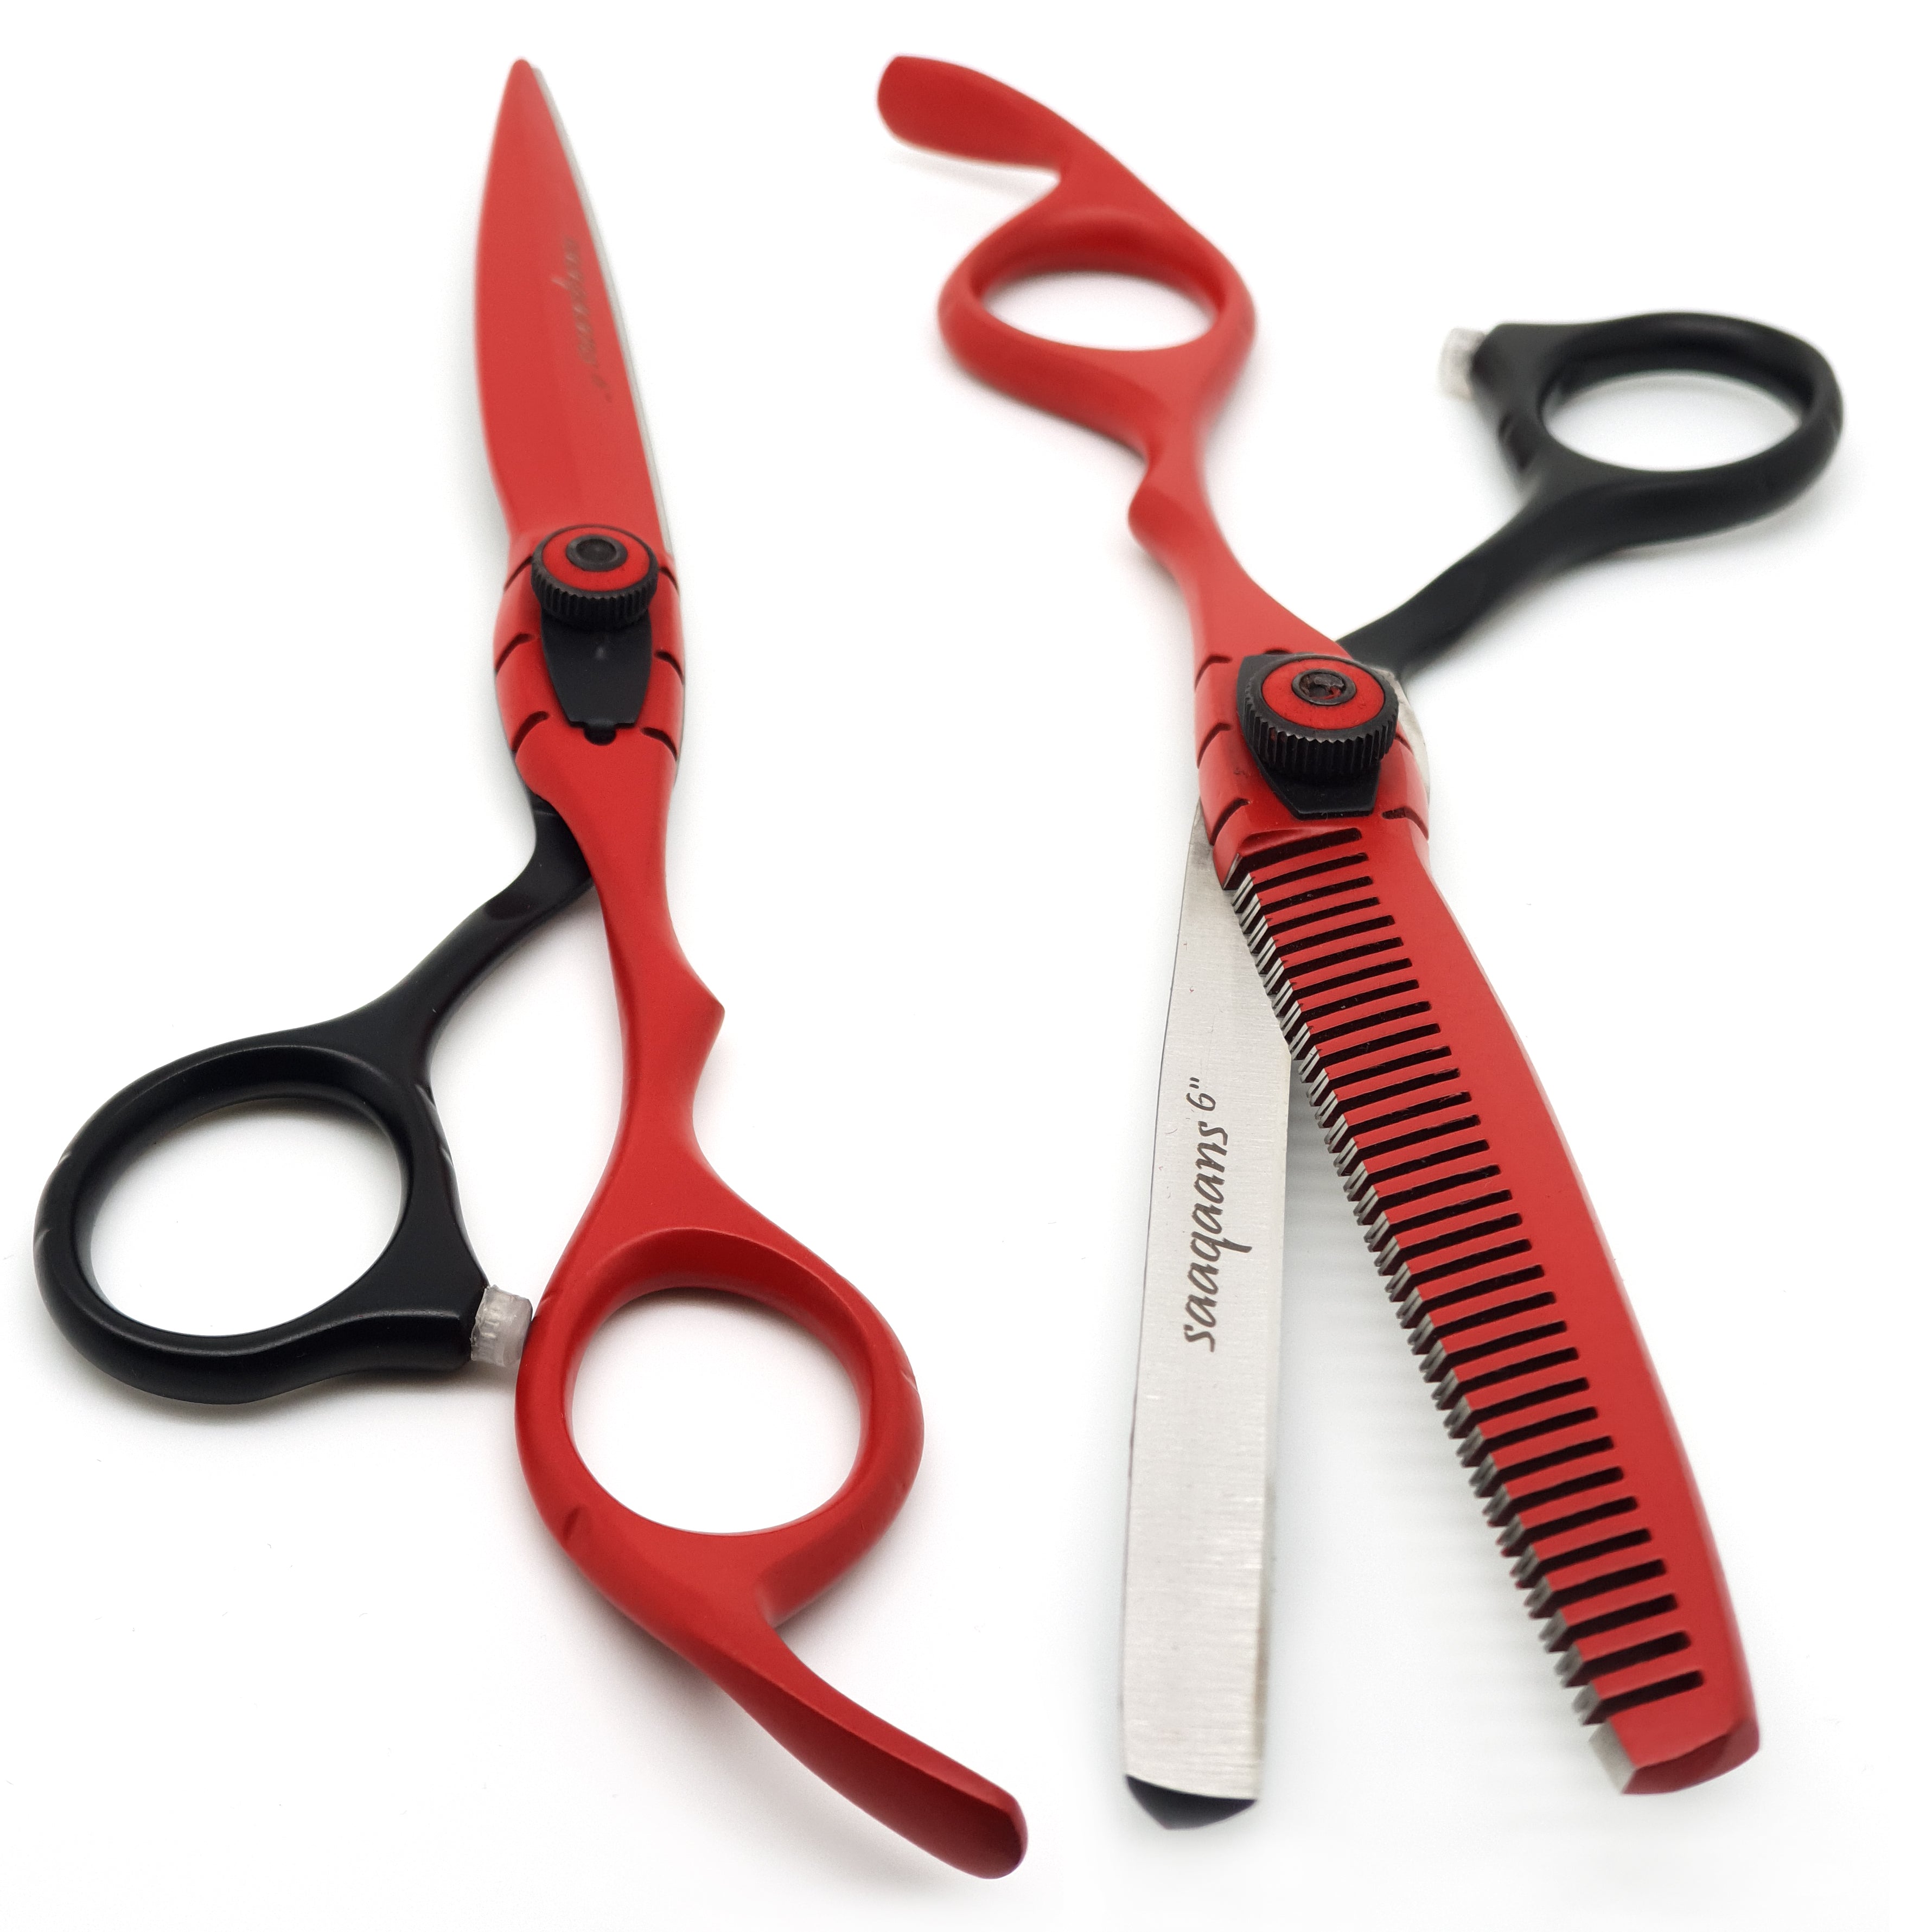 saaqaans professional hair cutting scissors set